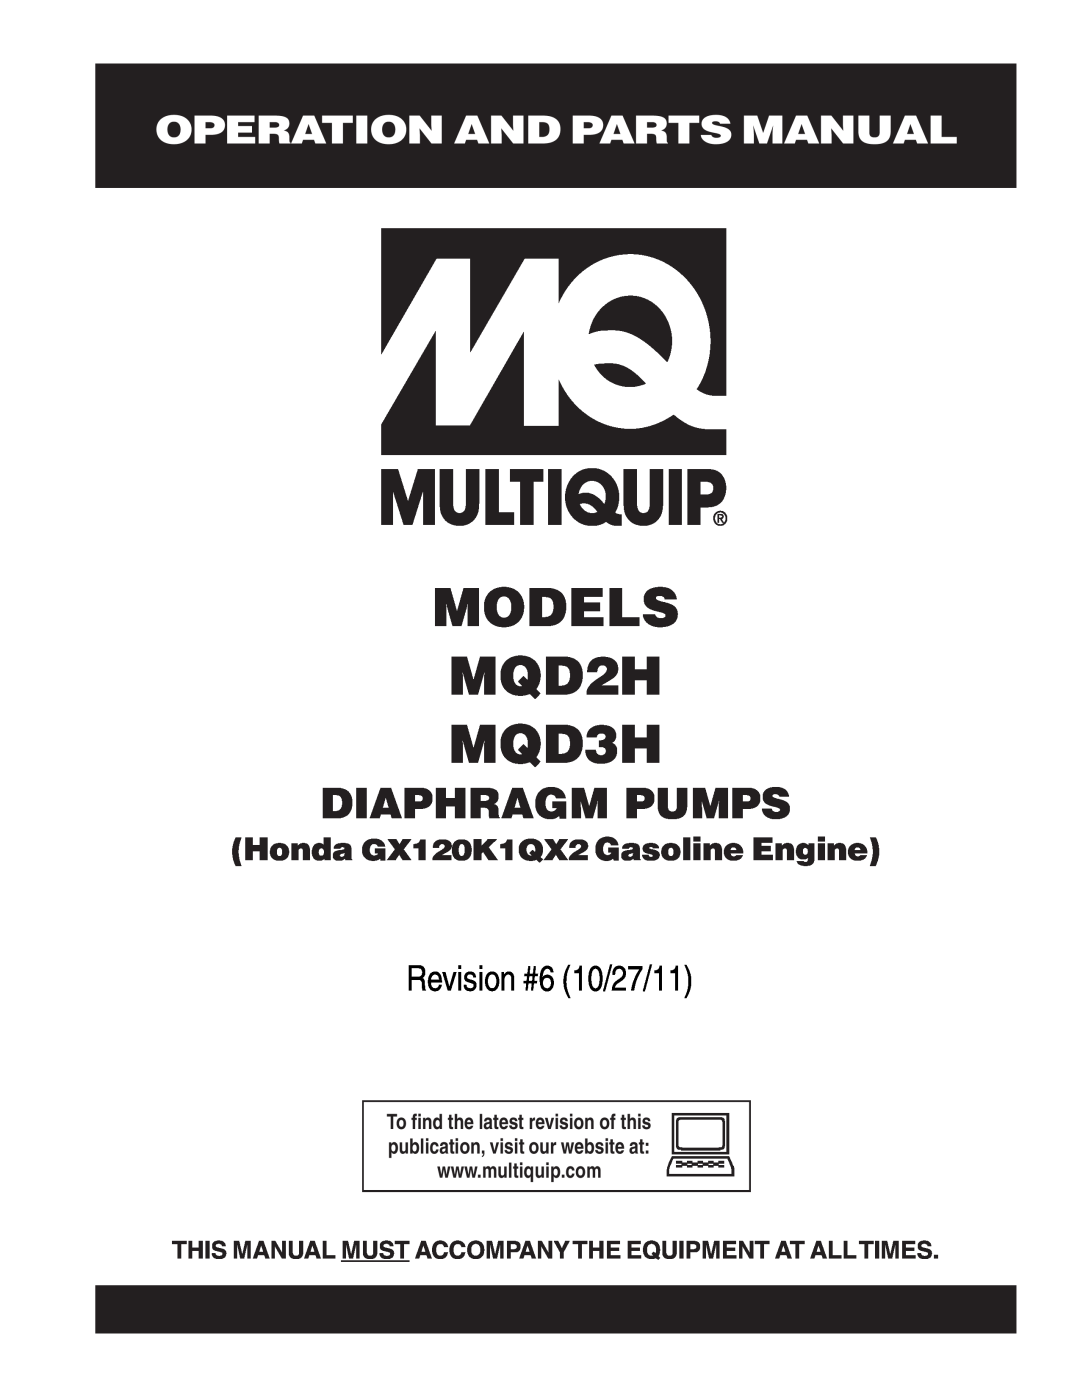 Multiquip manual Operation And Parts Manual, MODELS MQD2H MQD3H, Diaphragm Pumps, Revision #6 10/27/11 